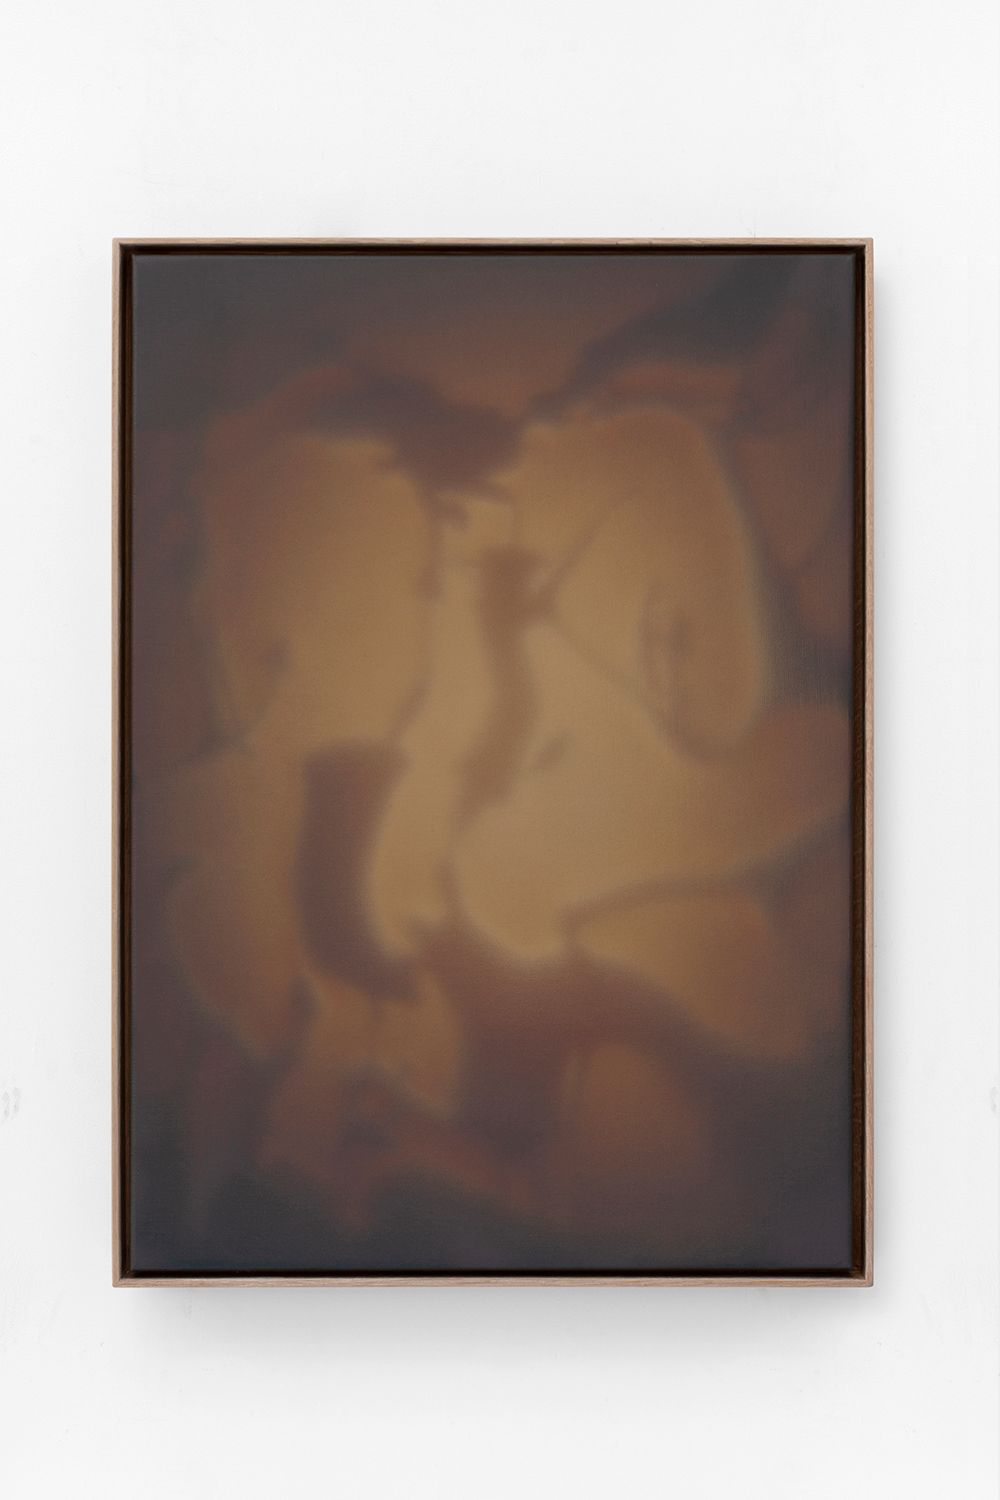 Shadow Canvas #169, 2018